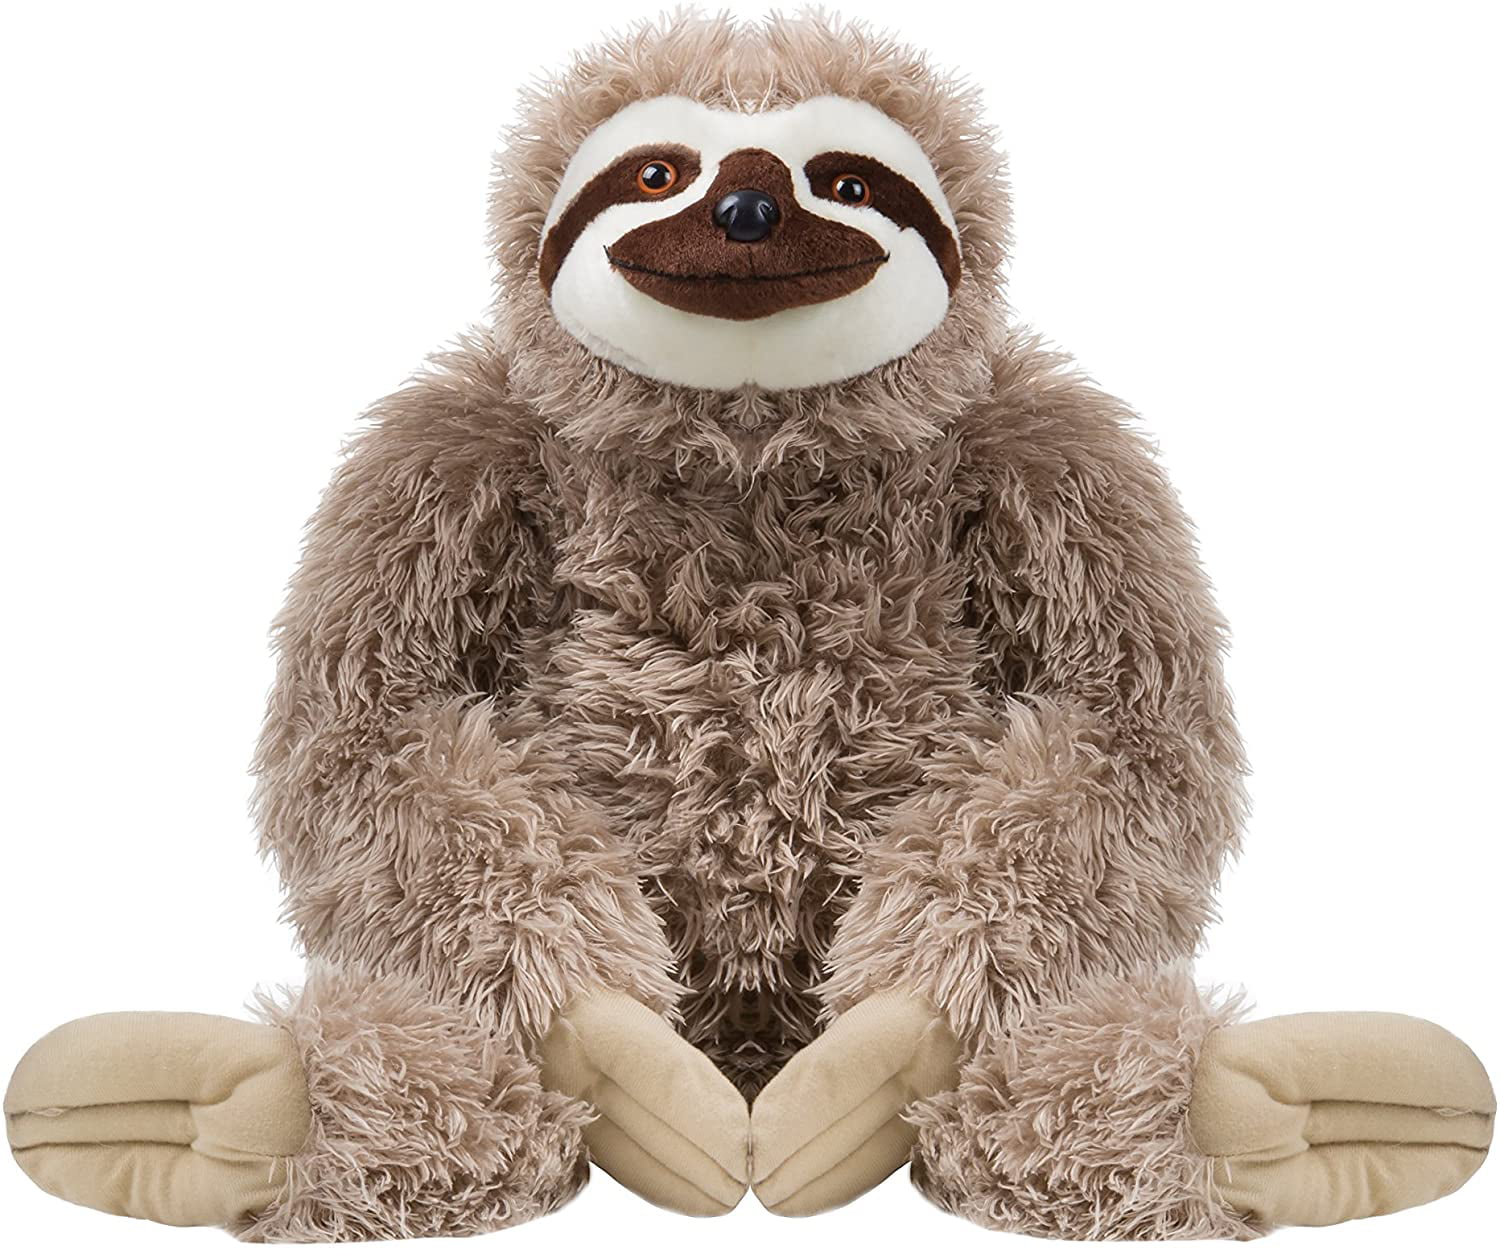 Hanging 22" Three Toed Sloth Plush by Wild Republic plush stuffed animal toy 3 